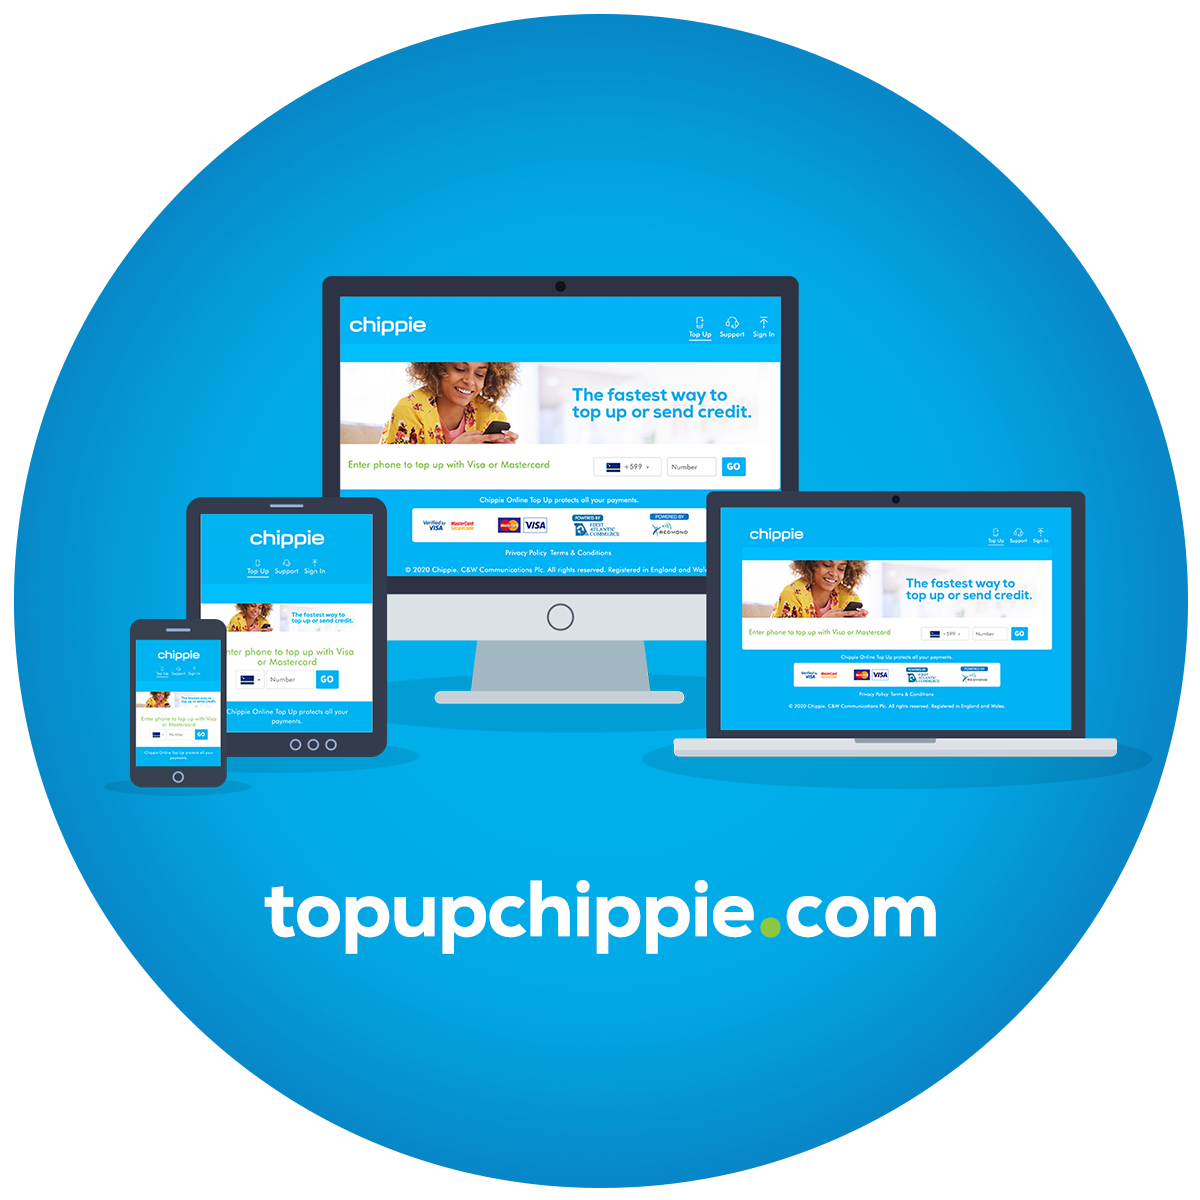 Topupchippie.com